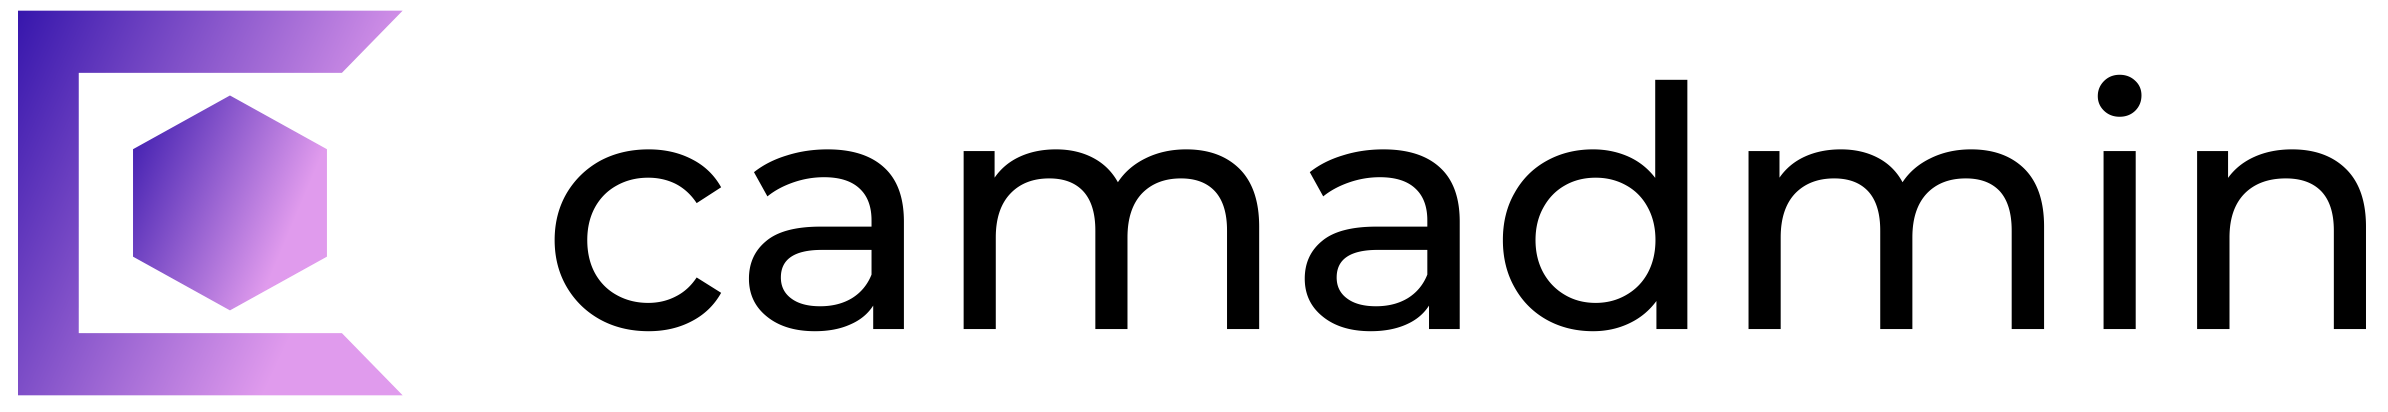 Camadmin logo